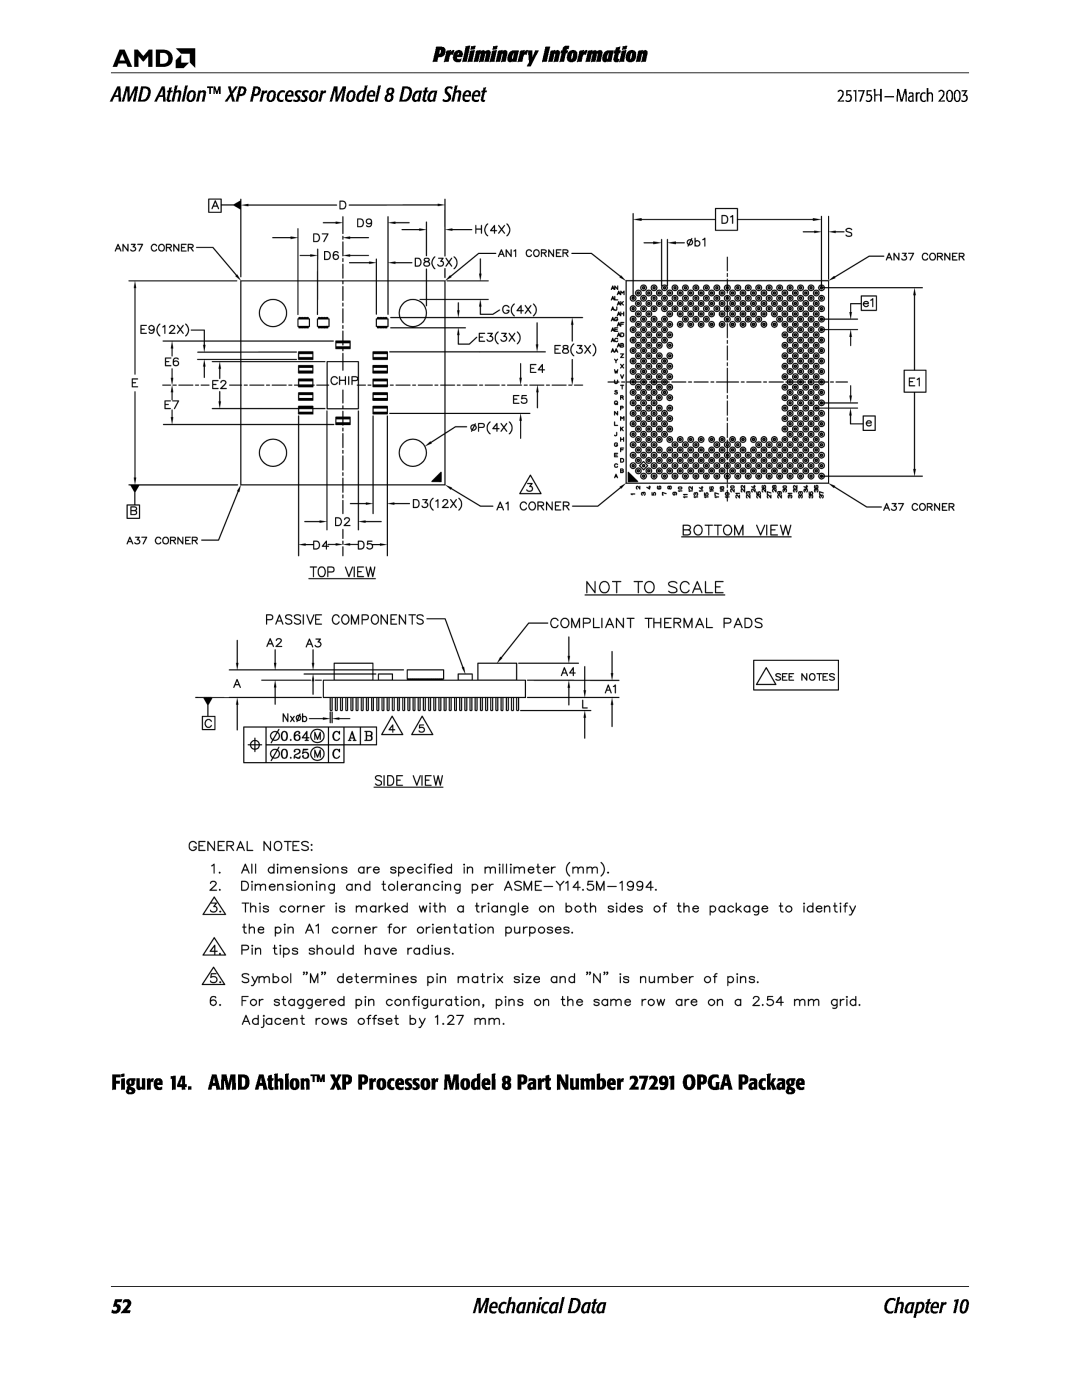 AMD manual Preliminary Information, AMD Athlon XP Processor Model 8 Data Sheet, Mechanical Data, Chapter, 25175H- March 